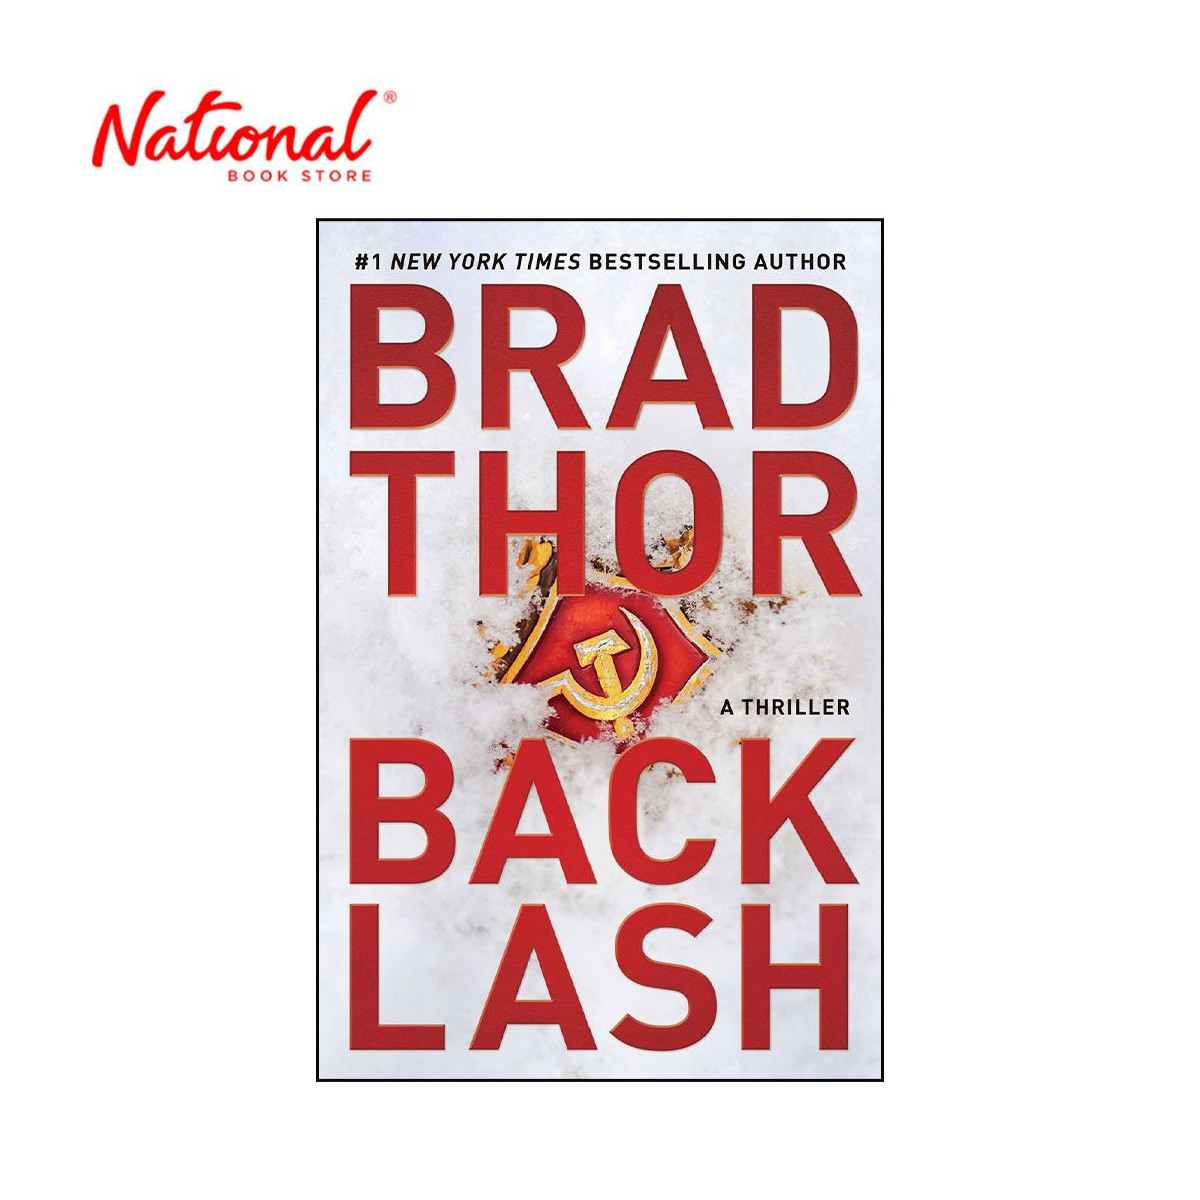 Backlash by Brad Thor - Hardcover - Thriller - Mystery - Suspense